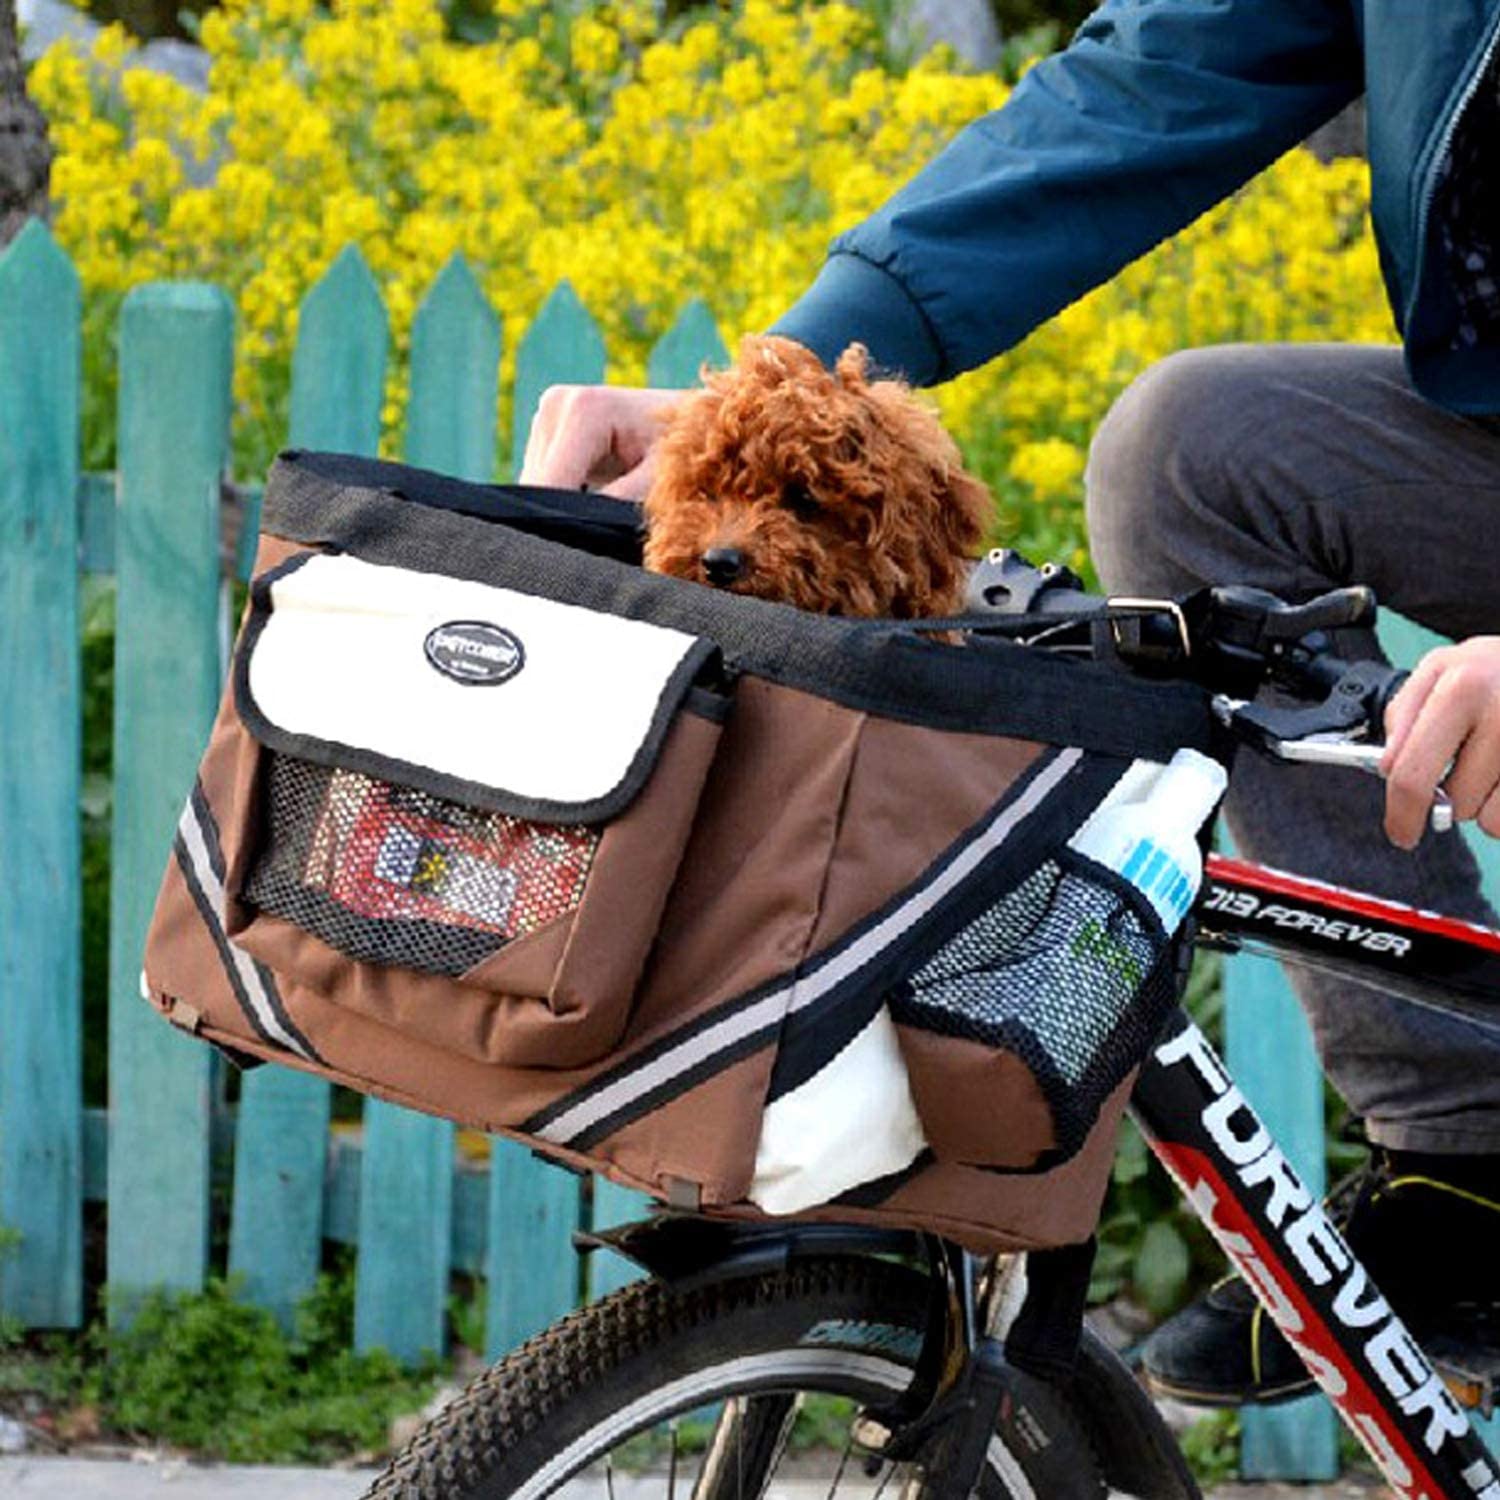  SJWR Bolsa para Cesta De Bicicleta Portador Mascotas, Delantera Perro Cachorro, Asiento Viaje Gatos Pequeños, con La Seguridad Tu Mascota,Black 